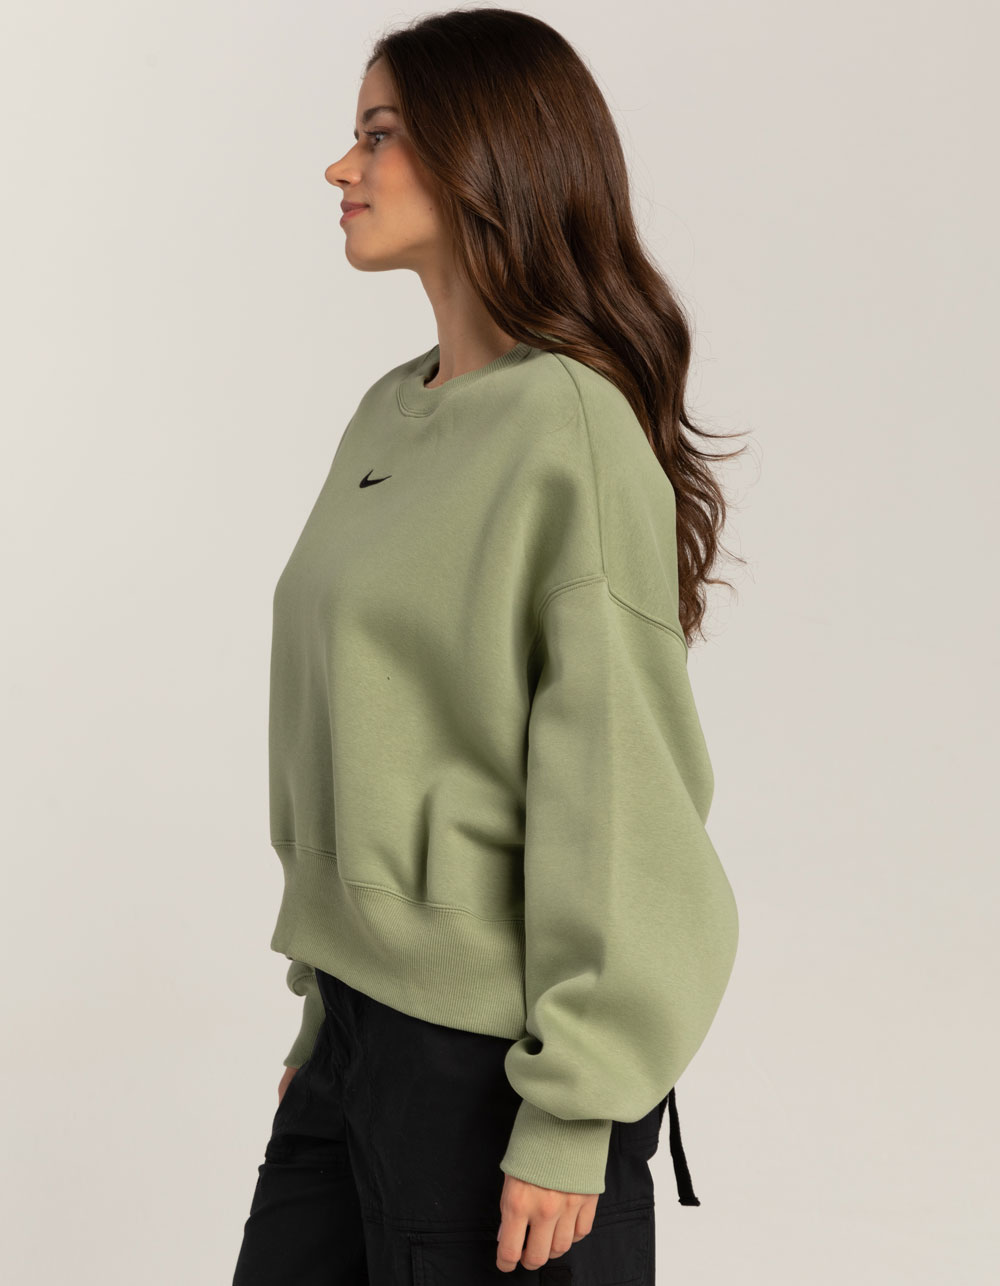 NIKE Sportswear Womens Oversized Crewneck Sweatshirt - SAGE